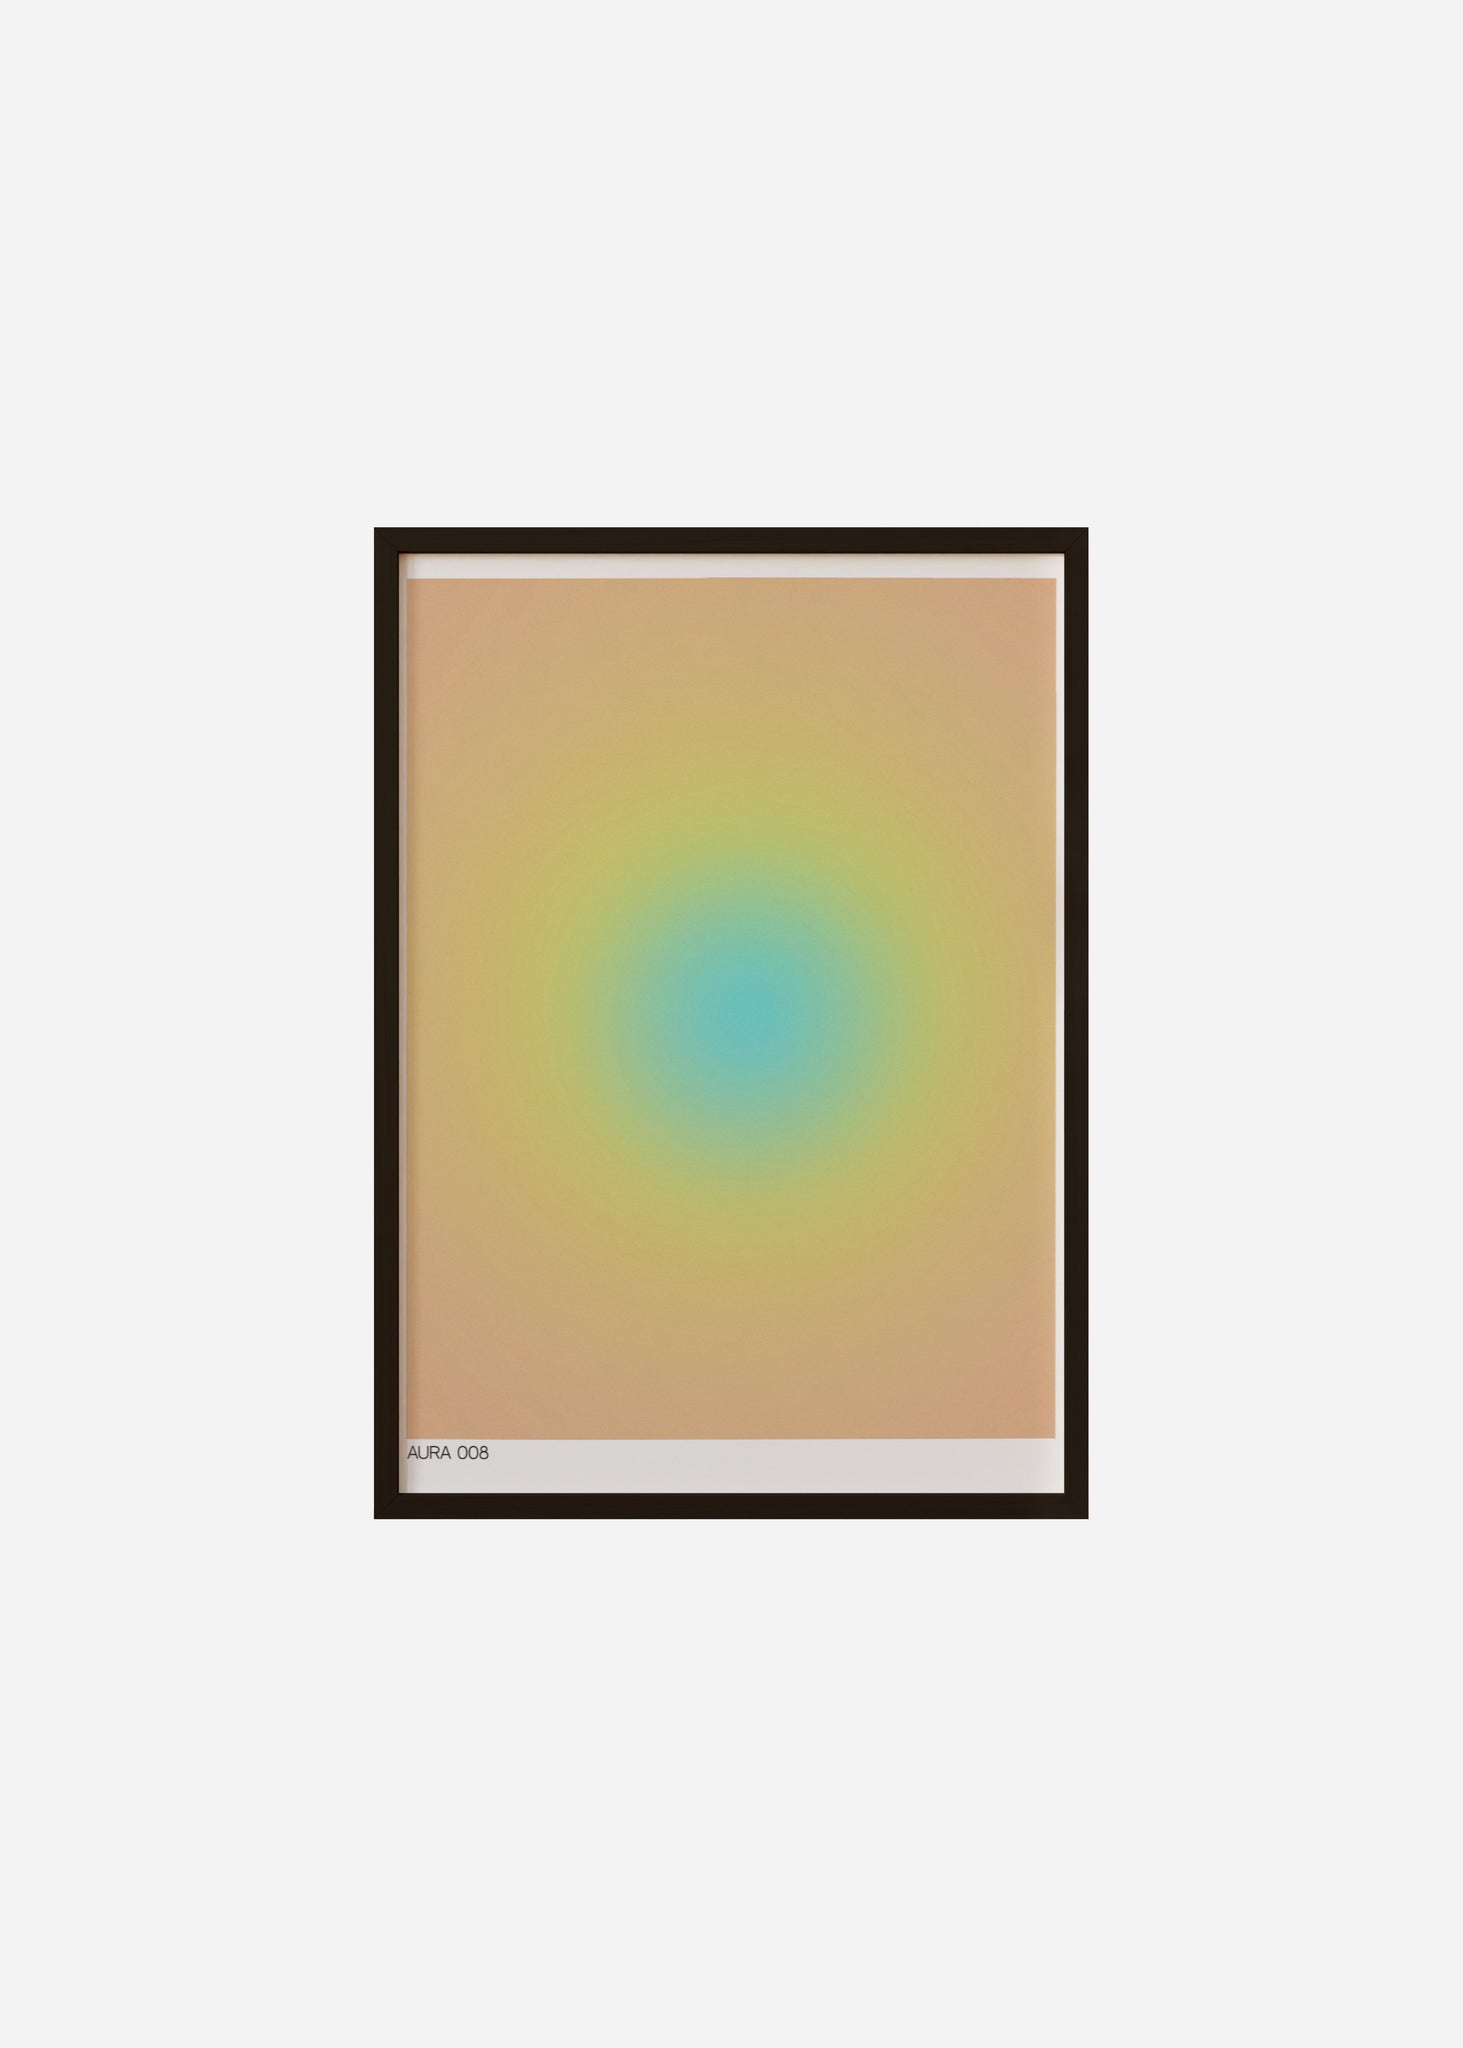 aura 008 Framed Print